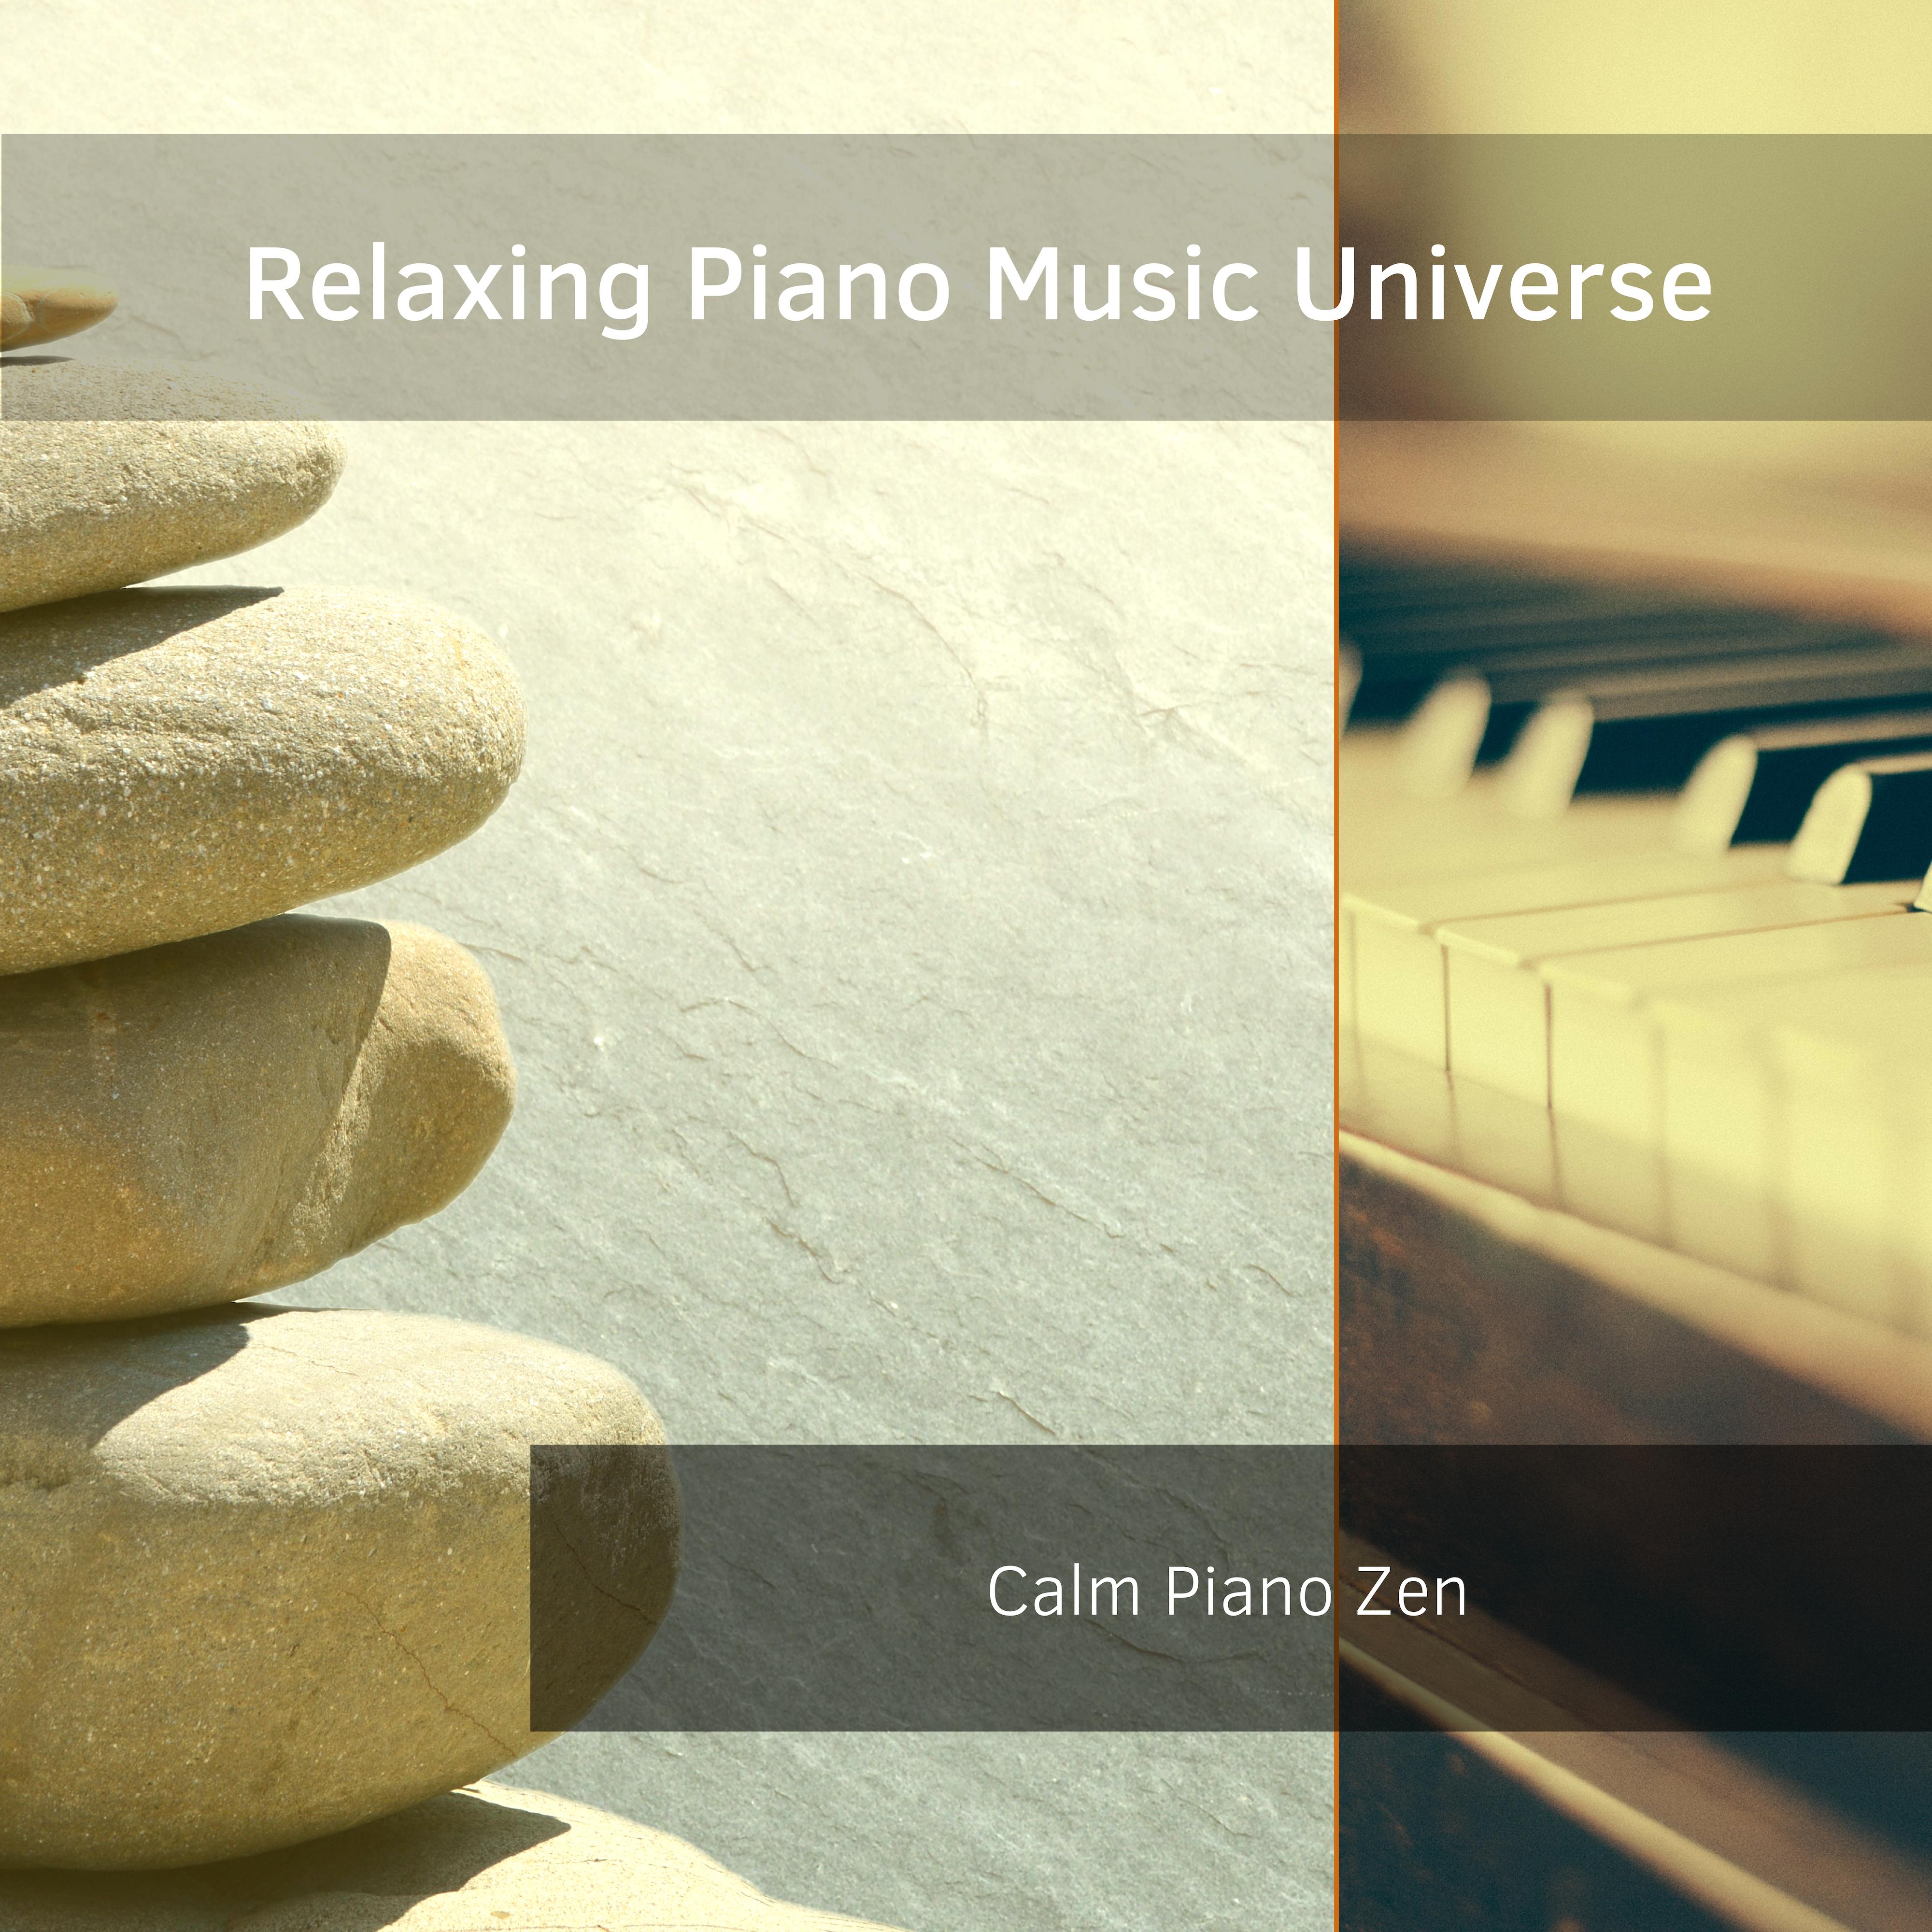 Calm Piano Zen